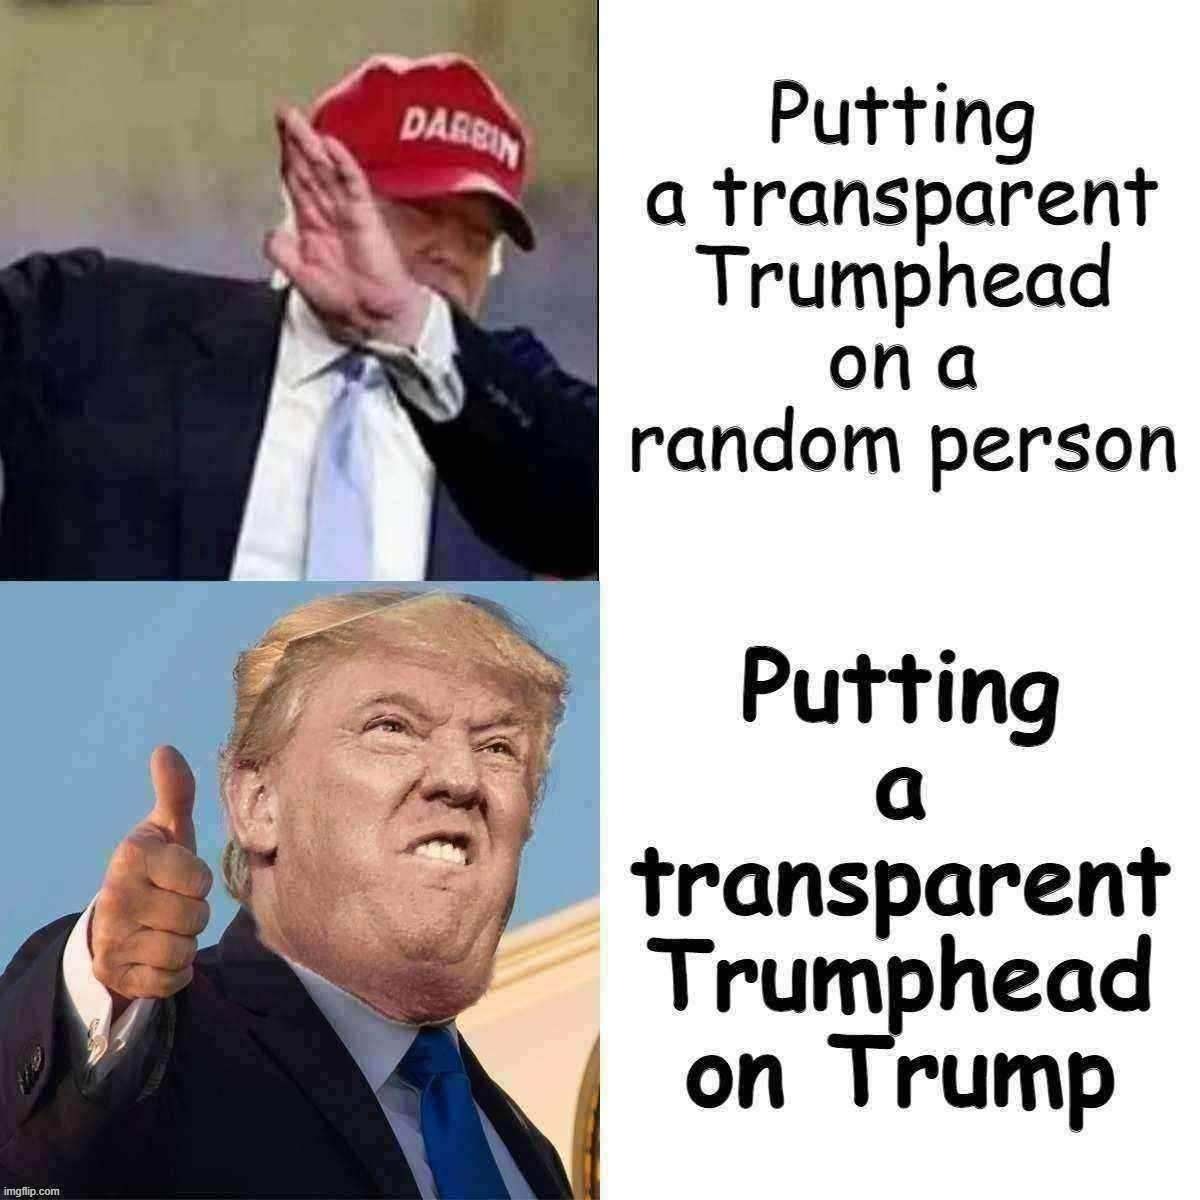 Transparent Trumphead | image tagged in transparent trumphead | made w/ Imgflip meme maker